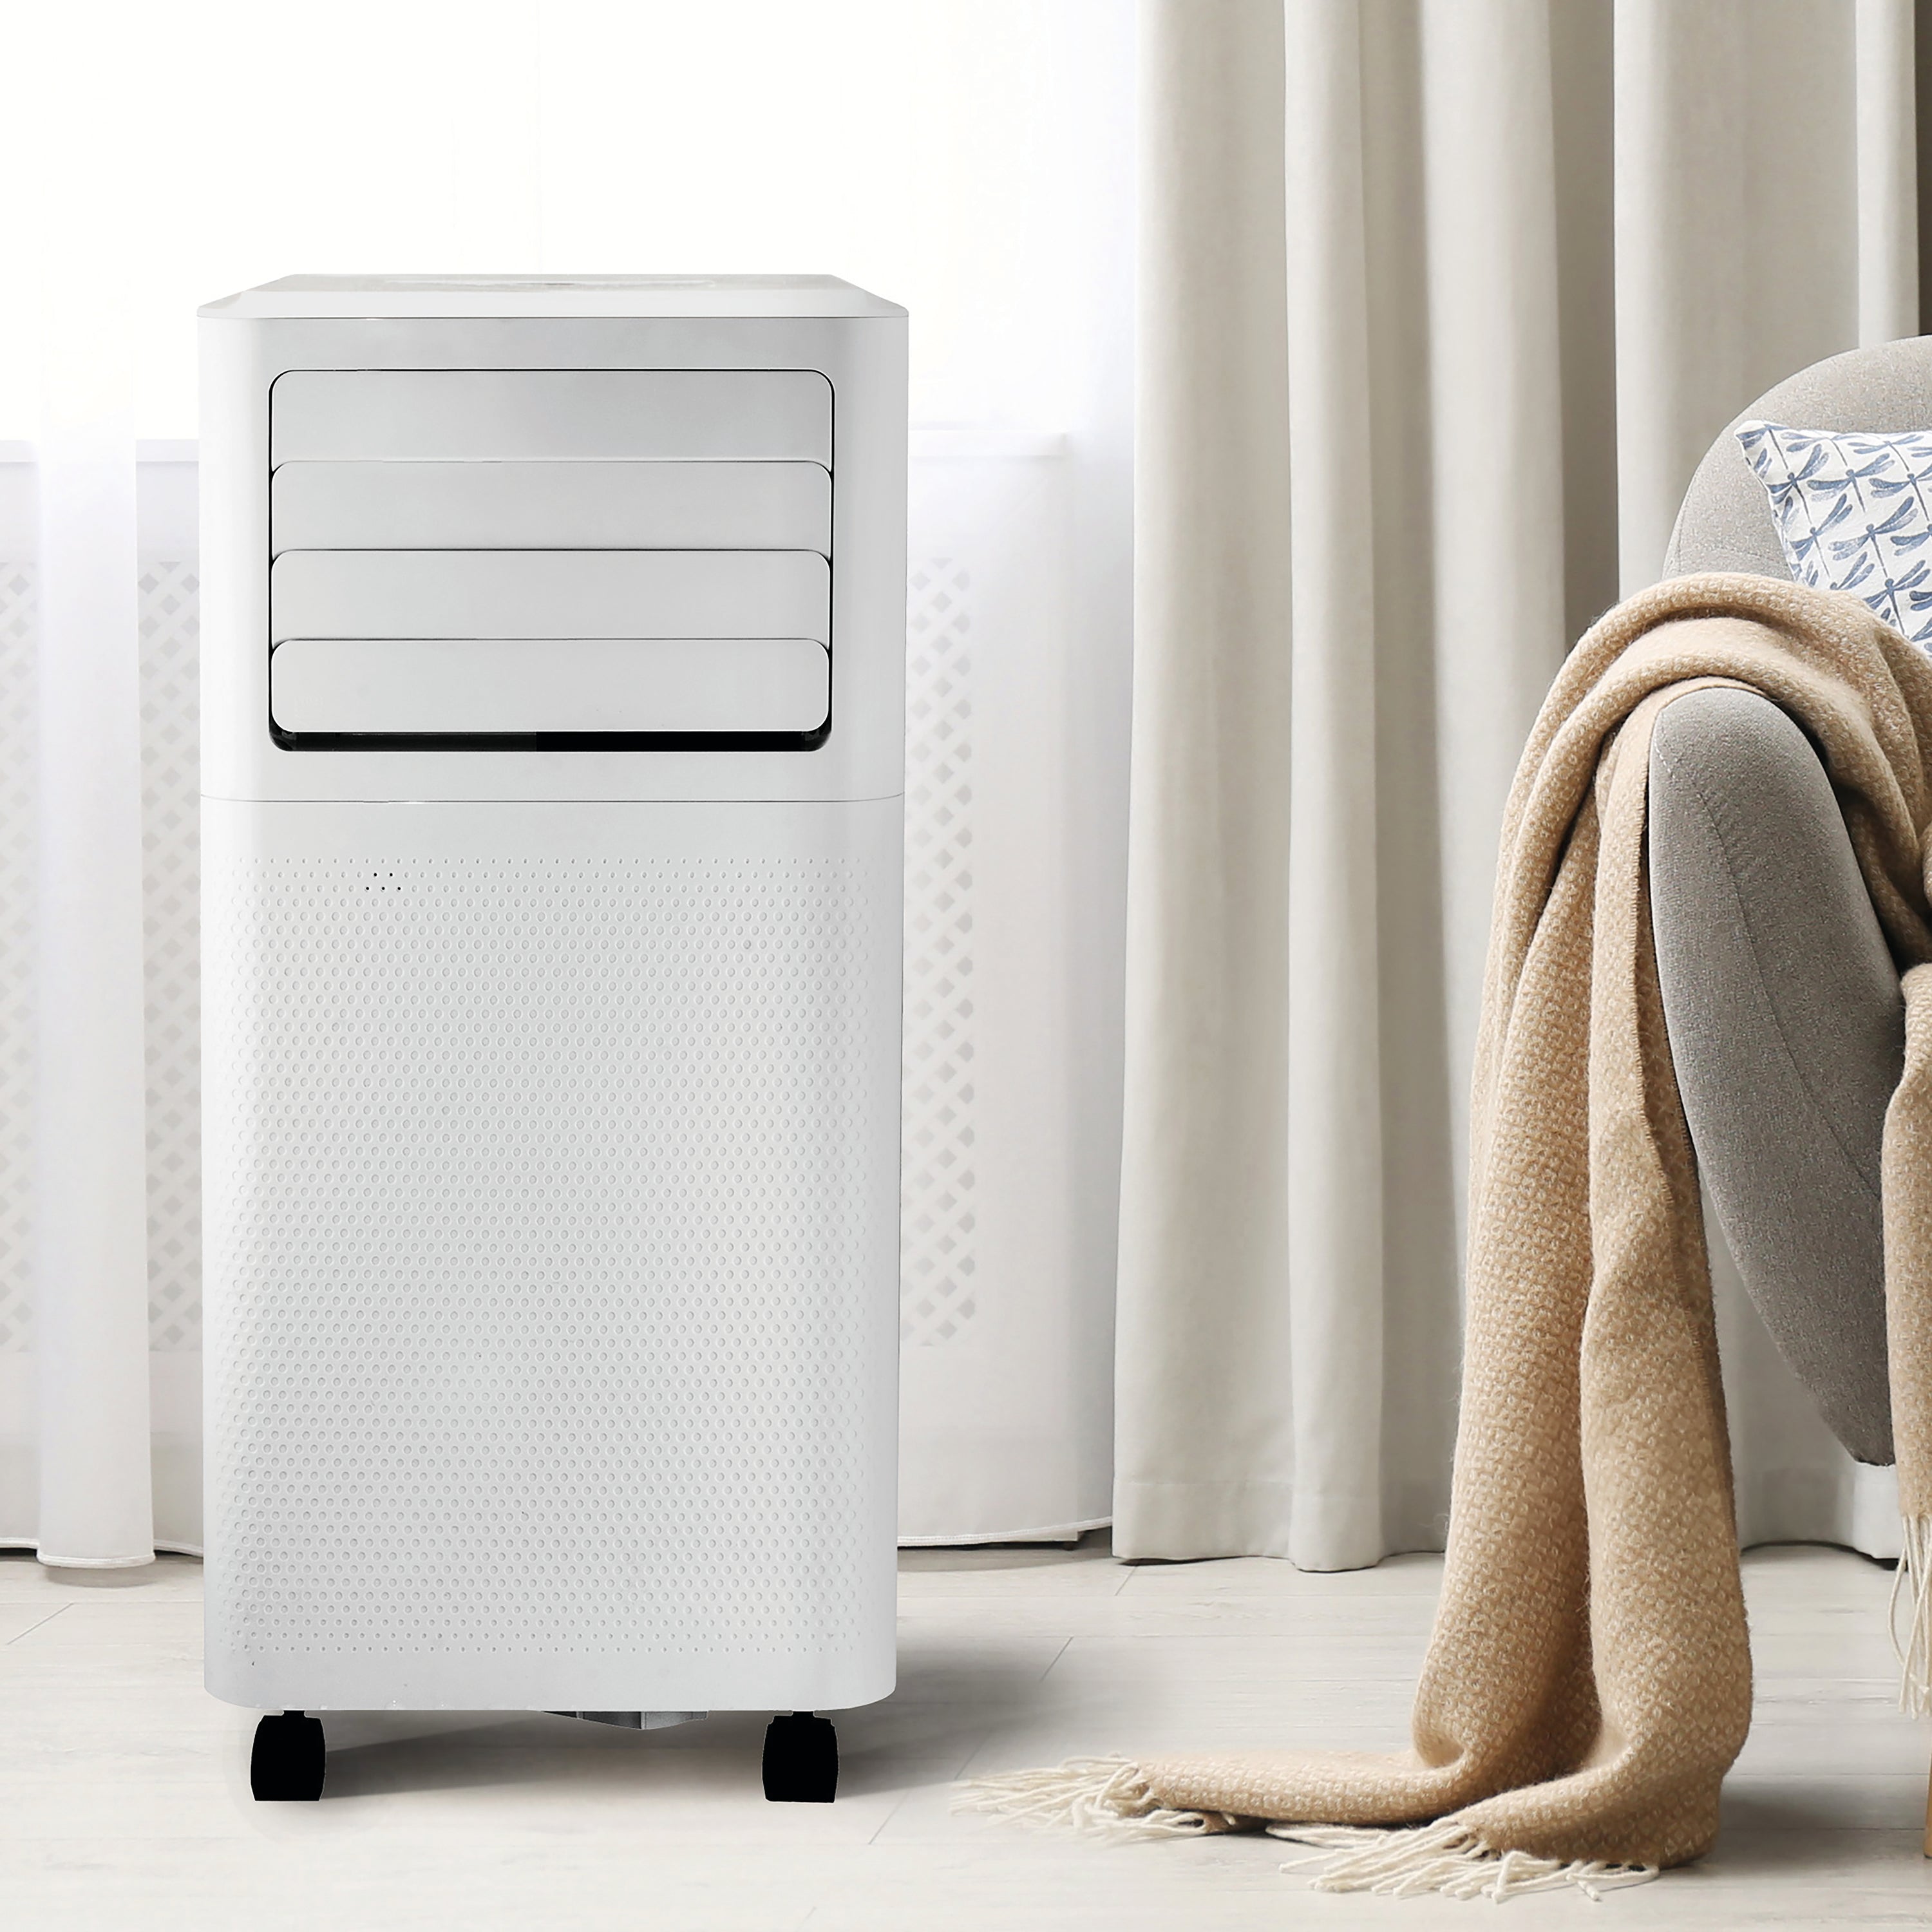 Igenix 9000 BTU Smart 3-In-1 Portable Air Conditioner with Remote Control White IG9909WIFI